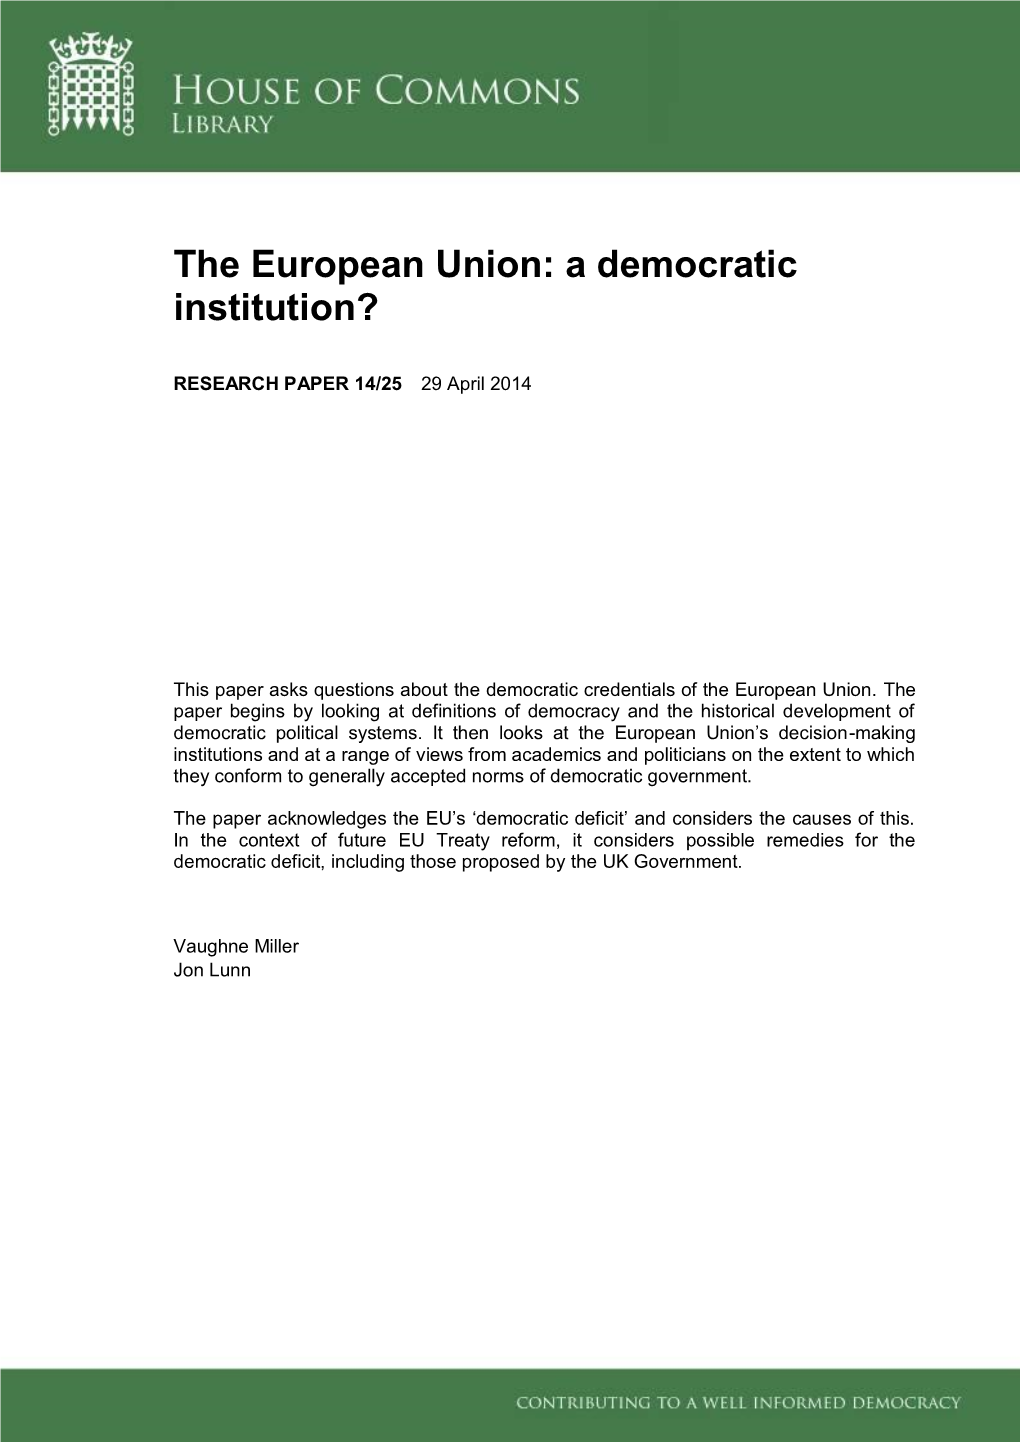 The European Union: a Democratic Institution?